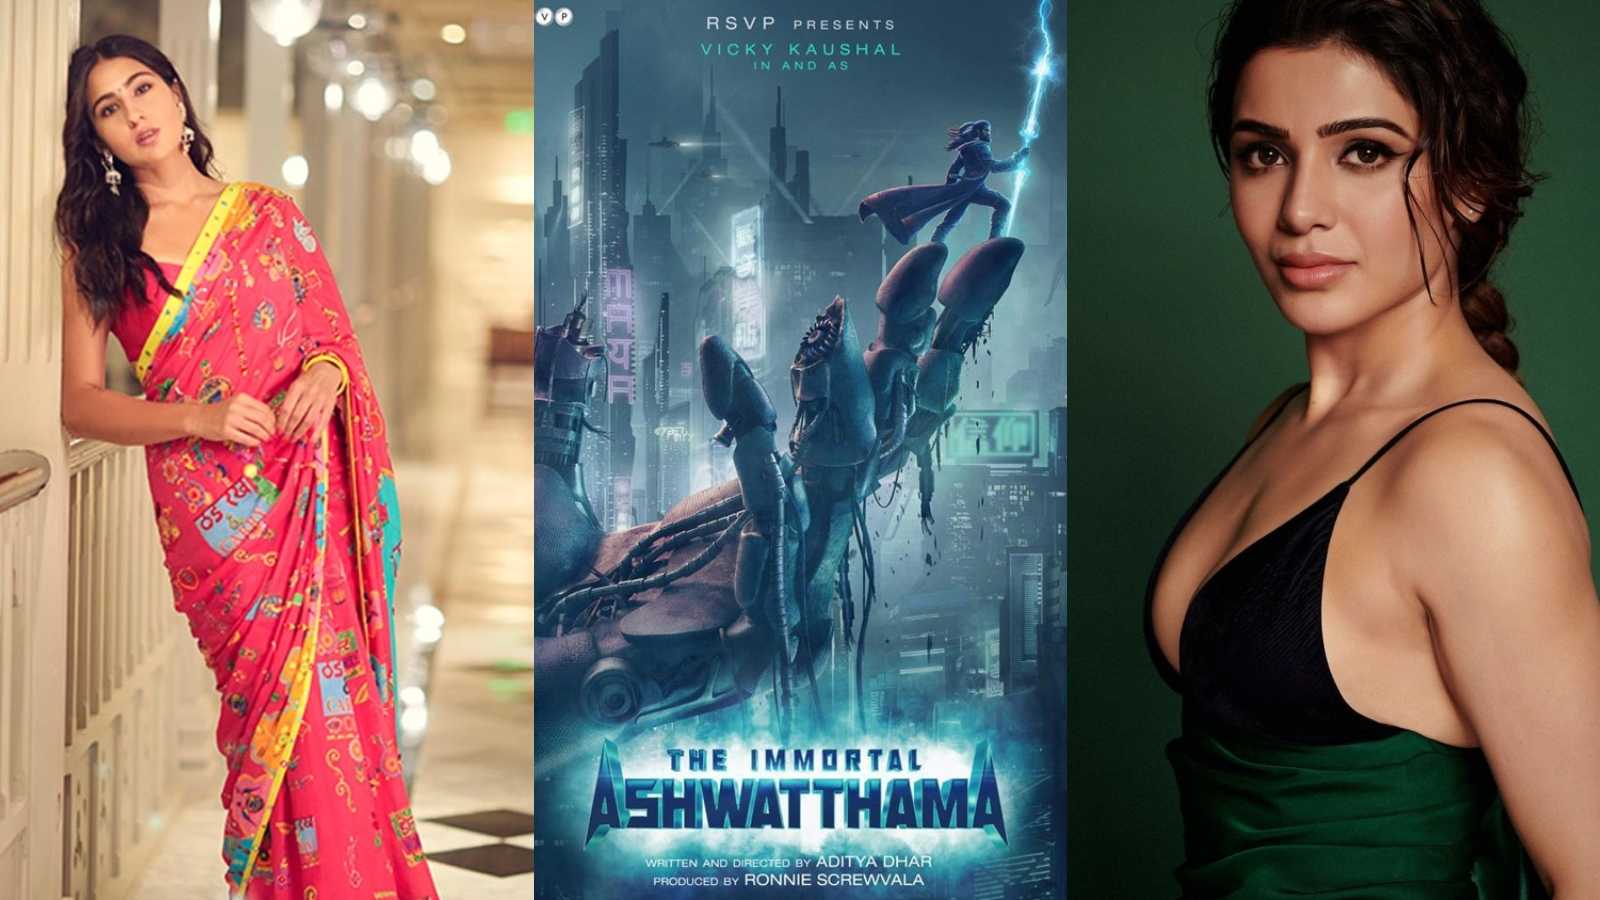 The Immortal Ashwatthama: Sara Ali Khan out, Samantha Ruth Prabhu in for the mega budget Vicky Kaushal superhero film?